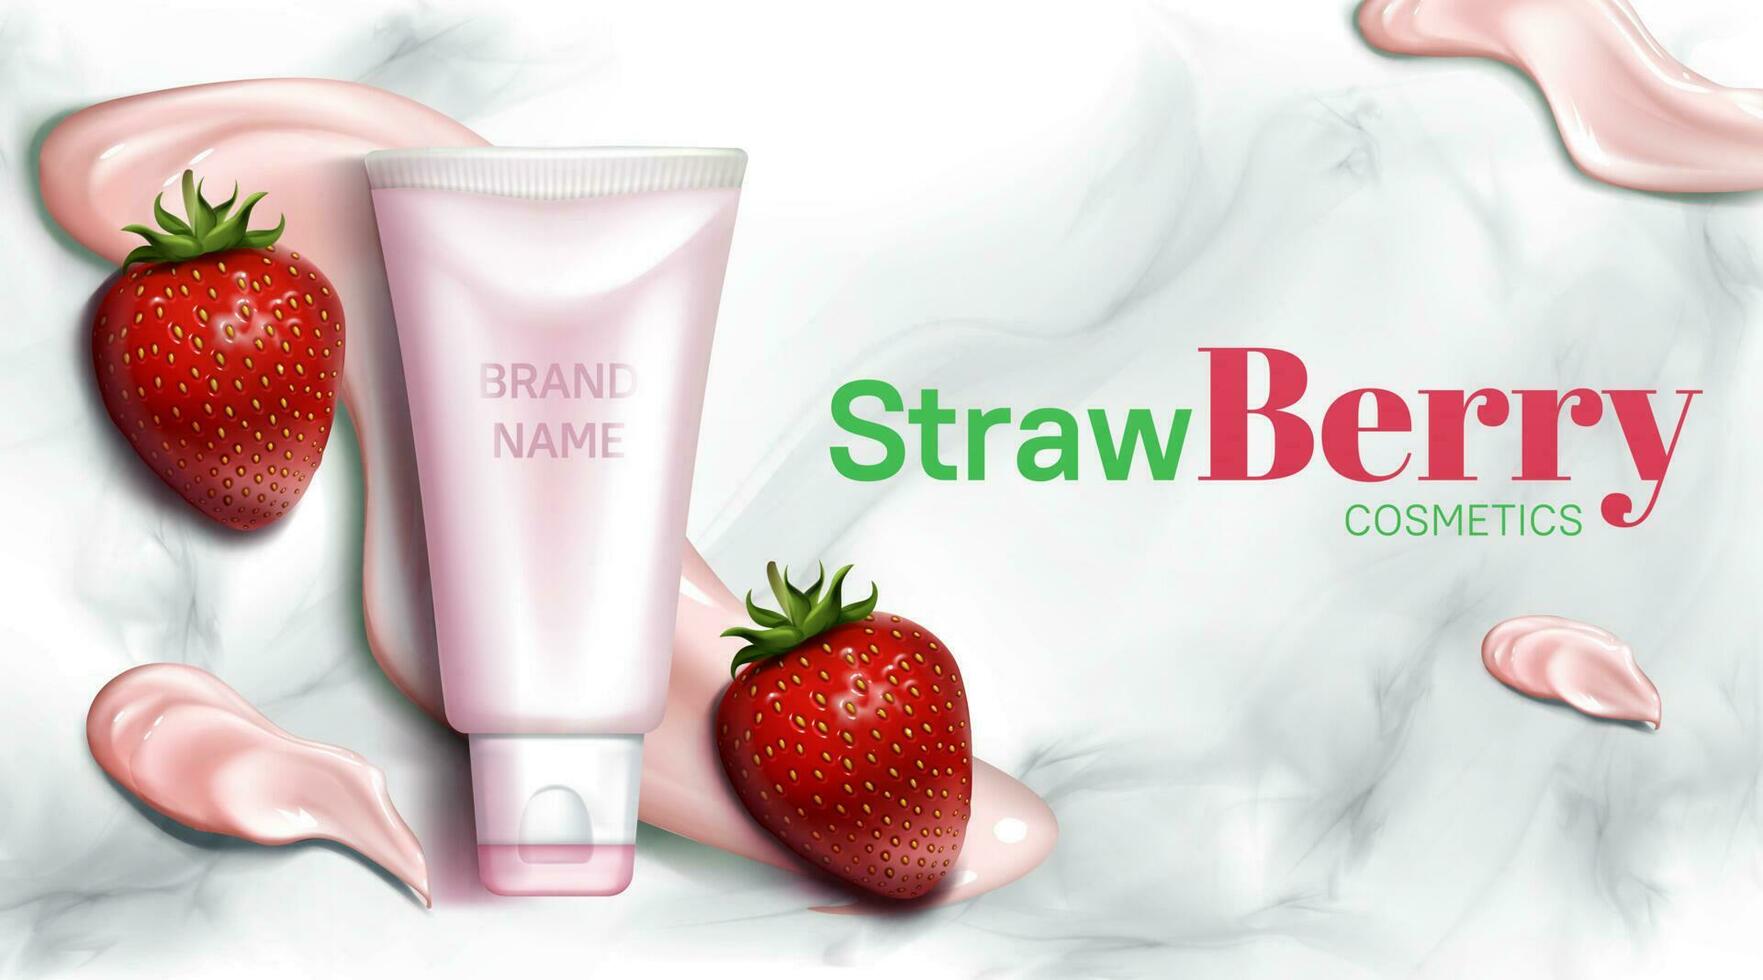 Strawberry cosmetics bottle mockup banner design vector